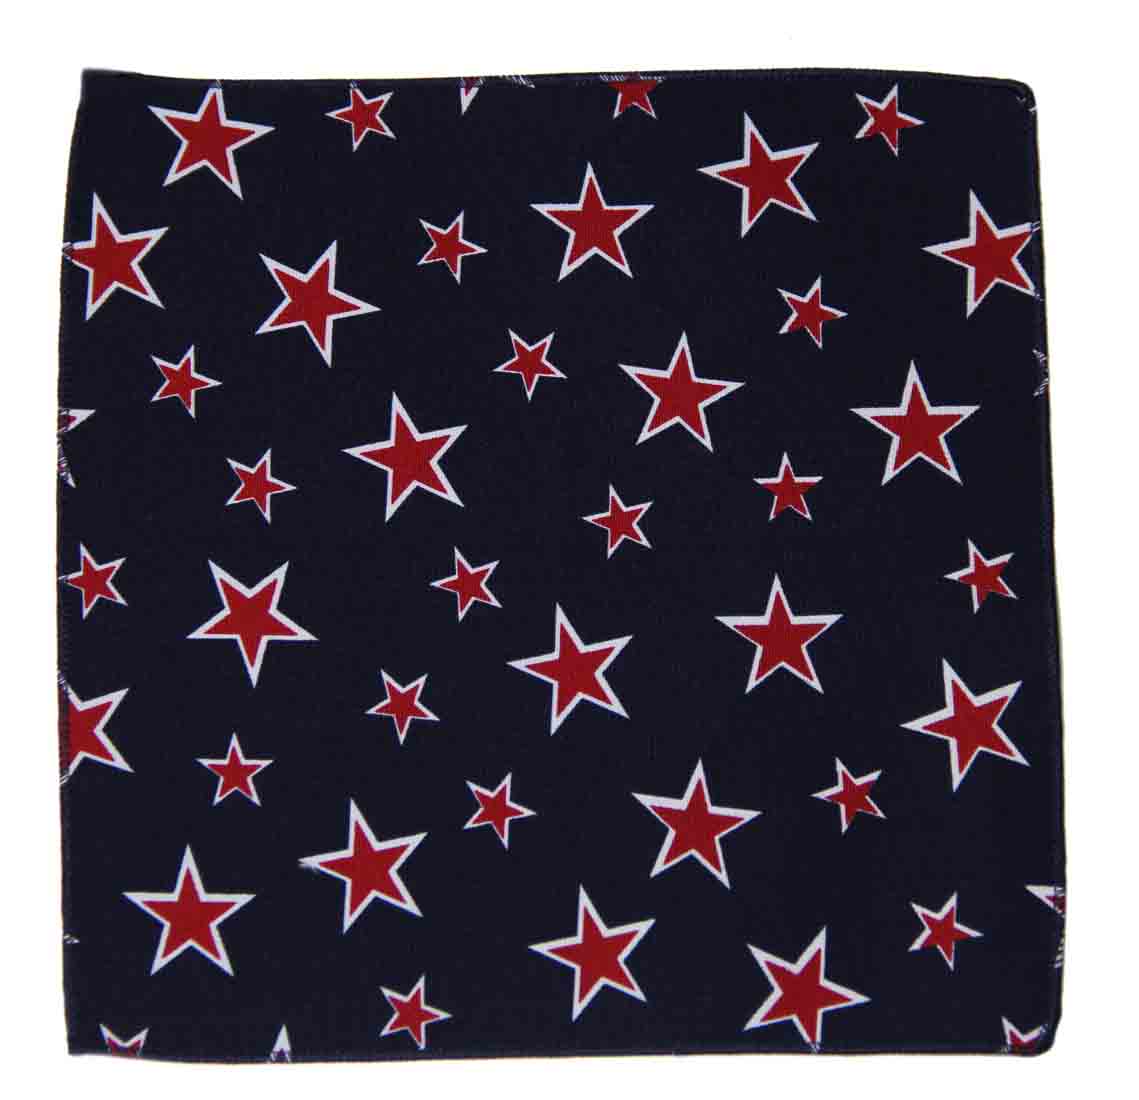 Gascoigne Pocket Square LInen Cotton Navy Blue Red White Stars Pattern Men's